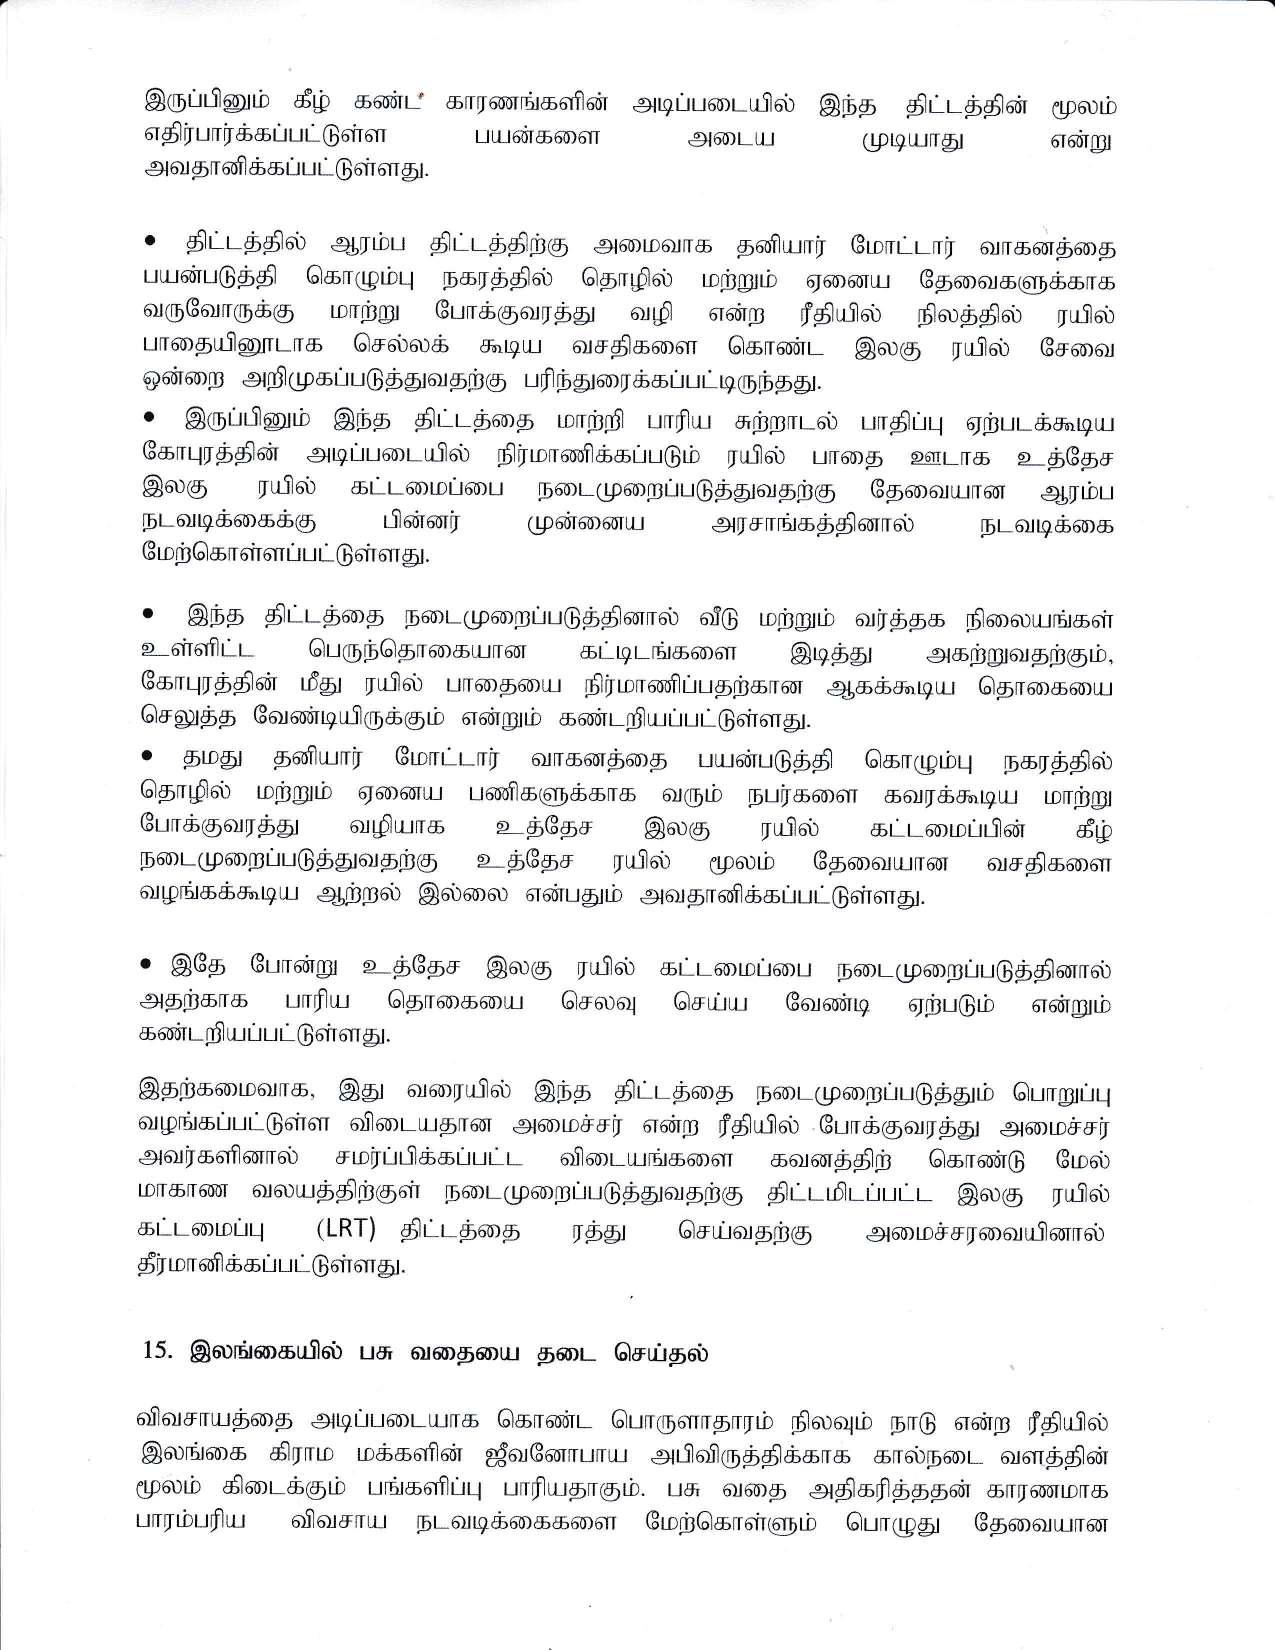 cabinet Desicion on 28.09.2020 Tamil 1 page 009